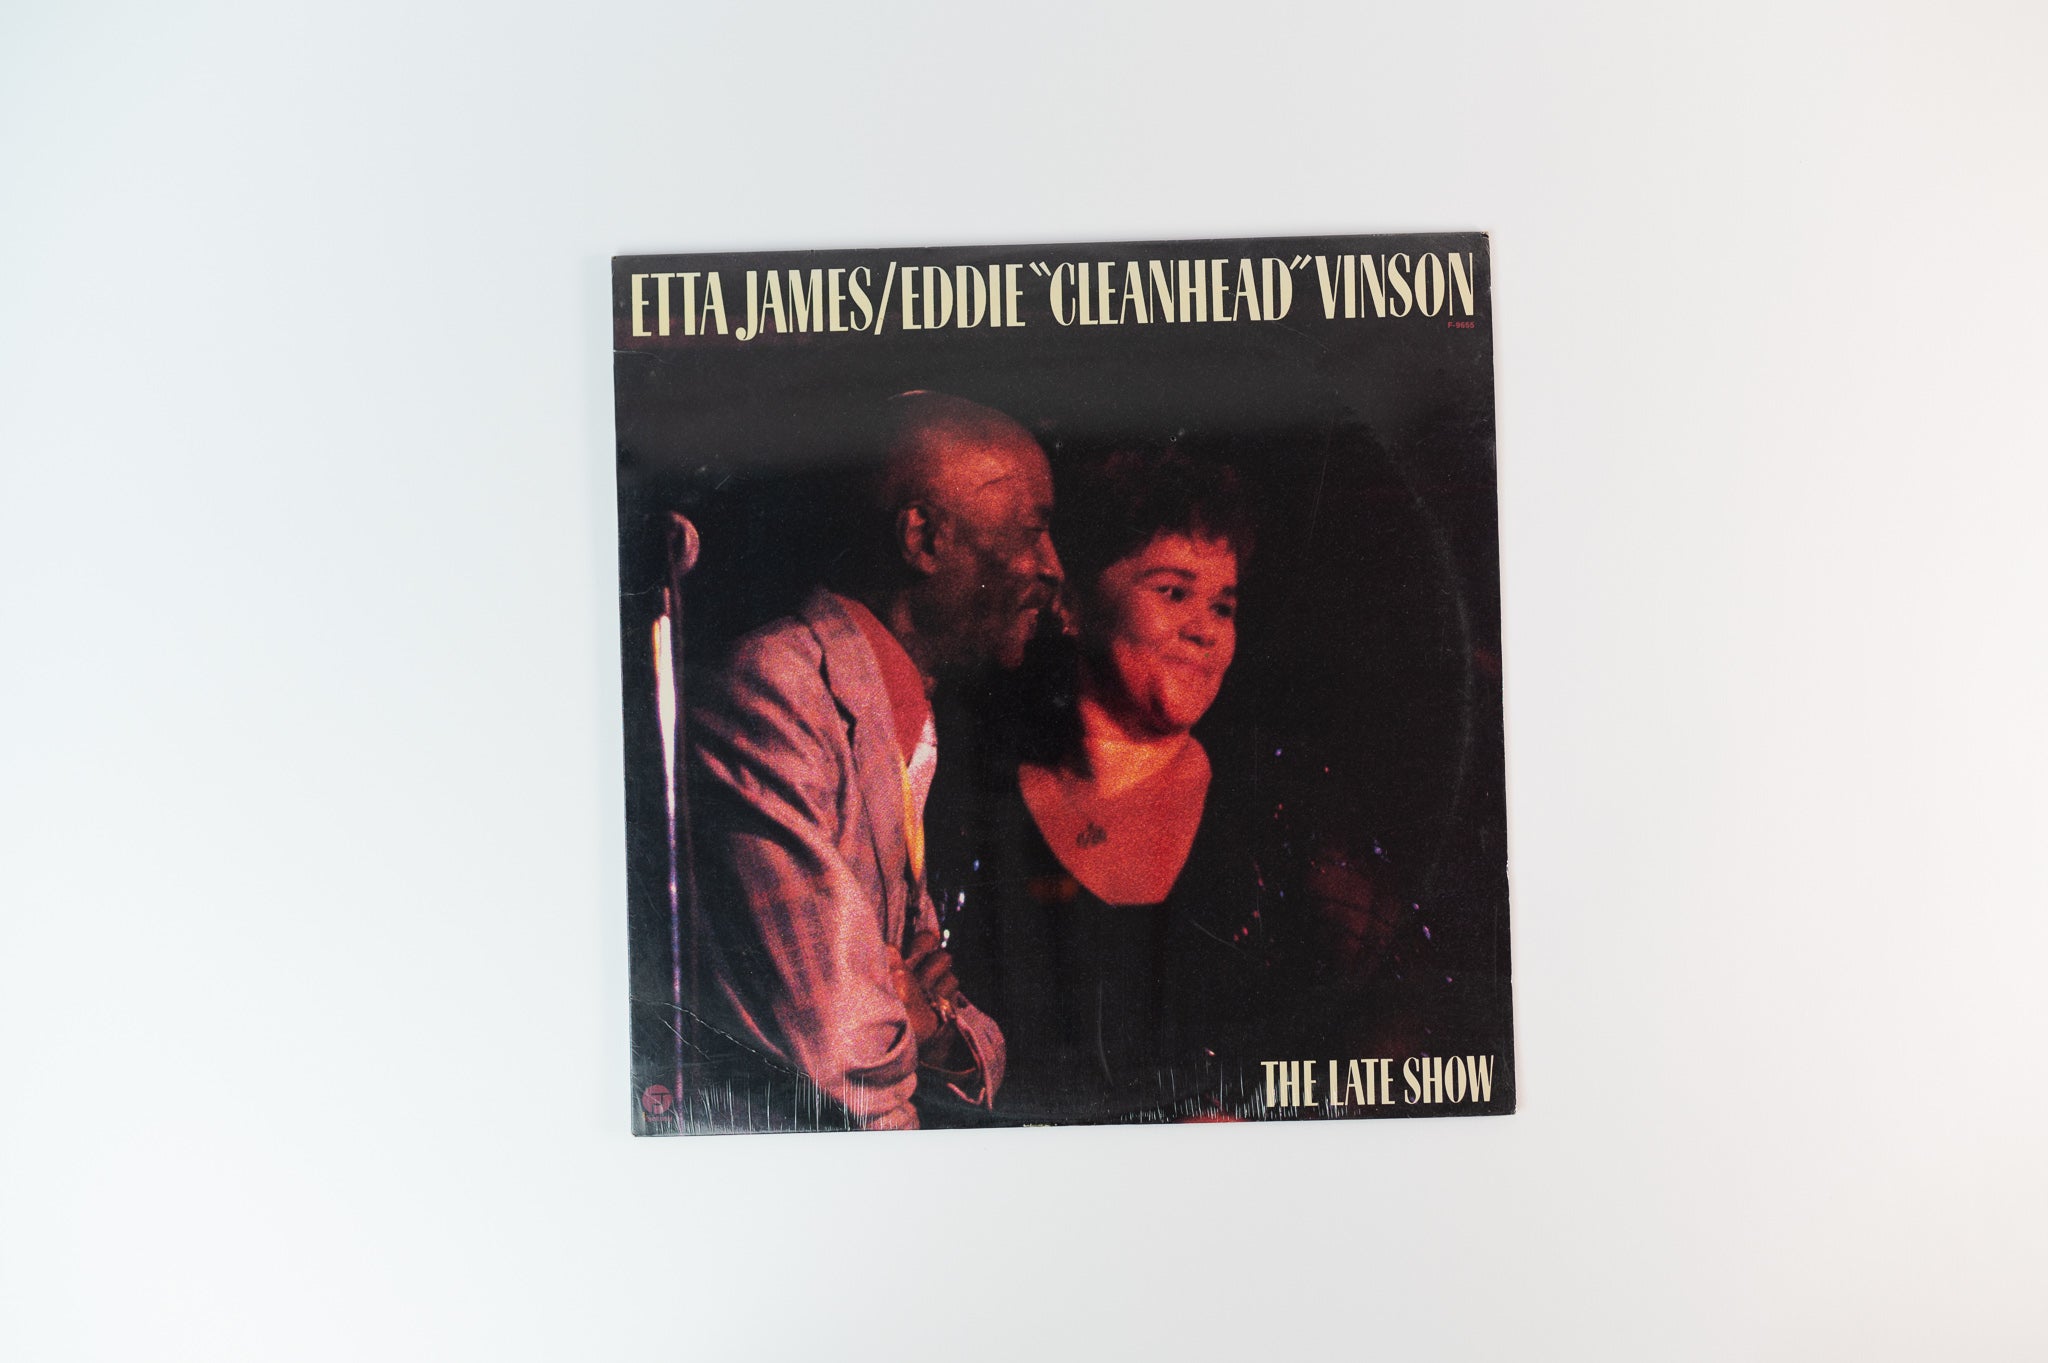 Etta James & Eddie Cleanhead Vinson - The Late Show on Fantasy Sealed